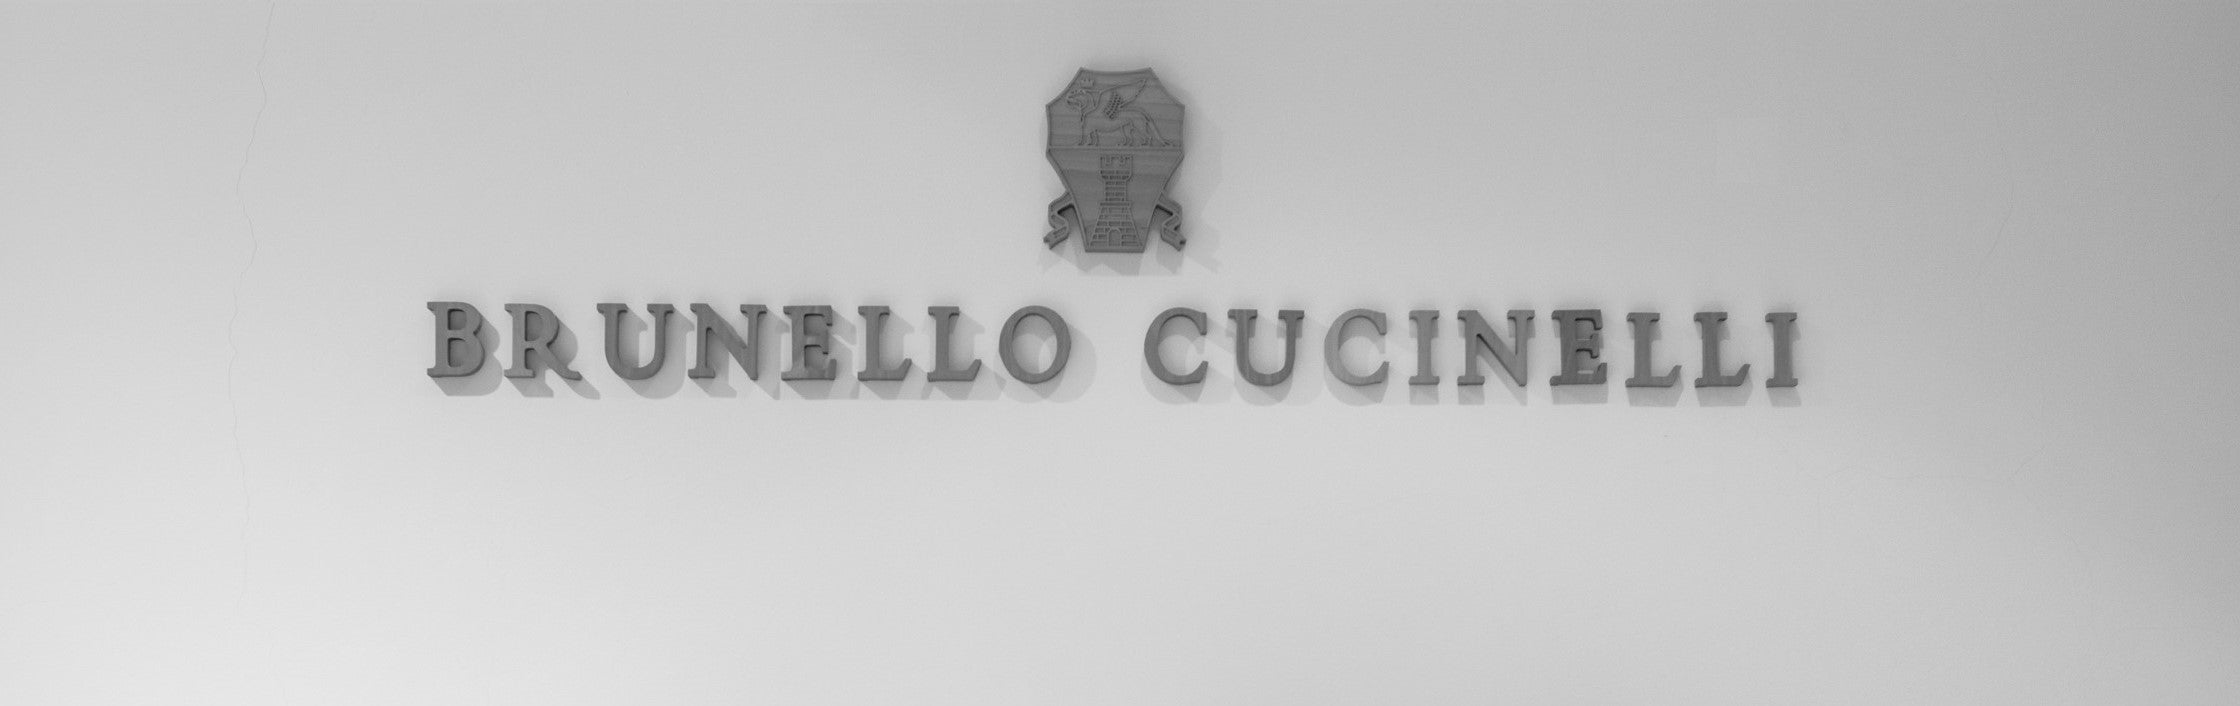 Brunello Cucinelli Men's Clothing: Luxury Italian Fashion – Top Shelf ...